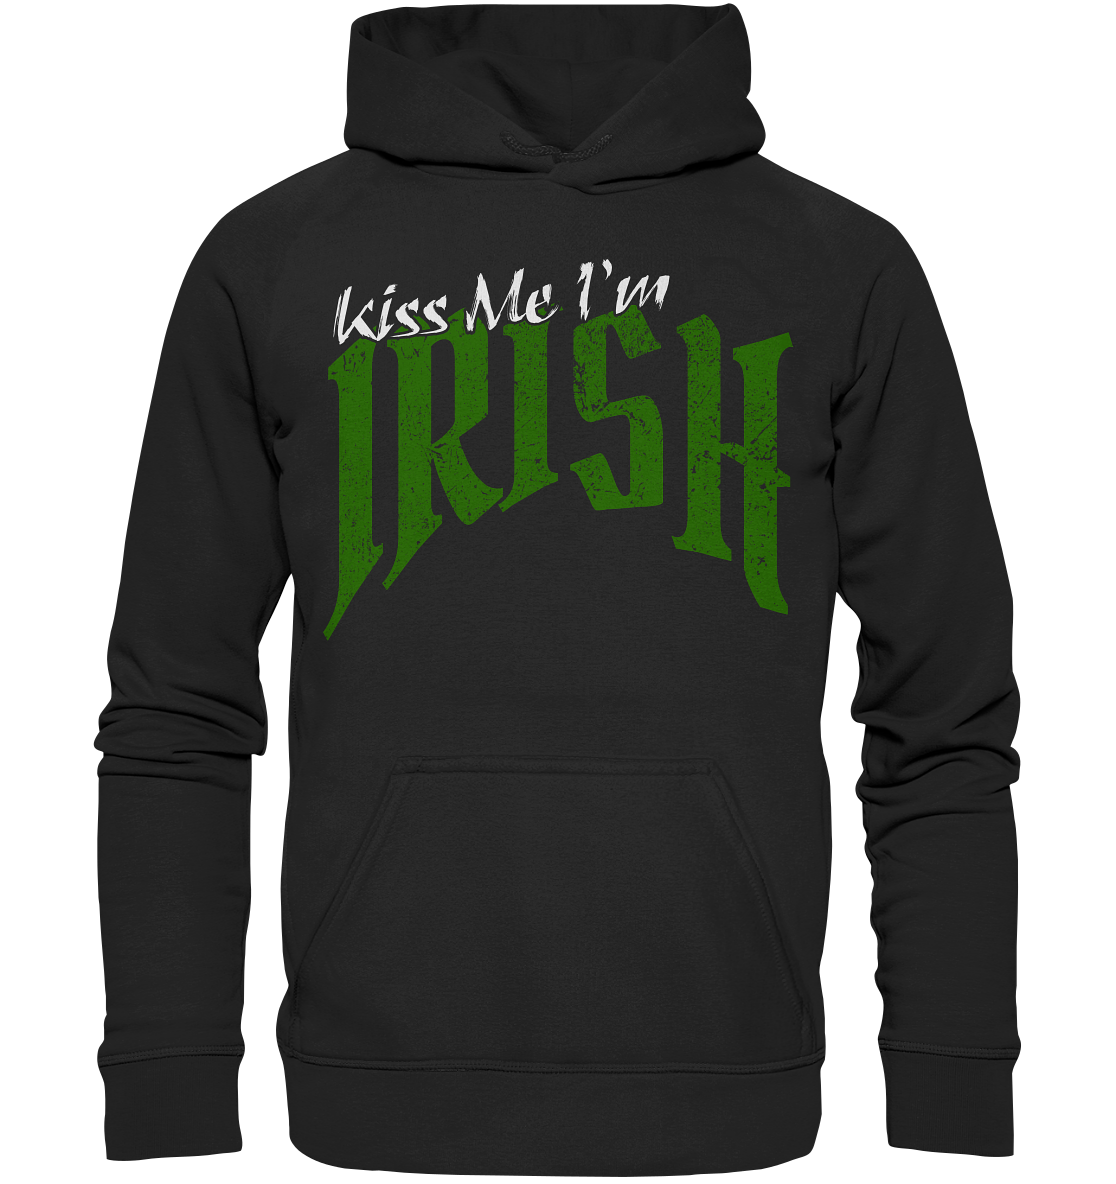 Kiss Me "I'm Irish" - Basic Unisex Hoodie